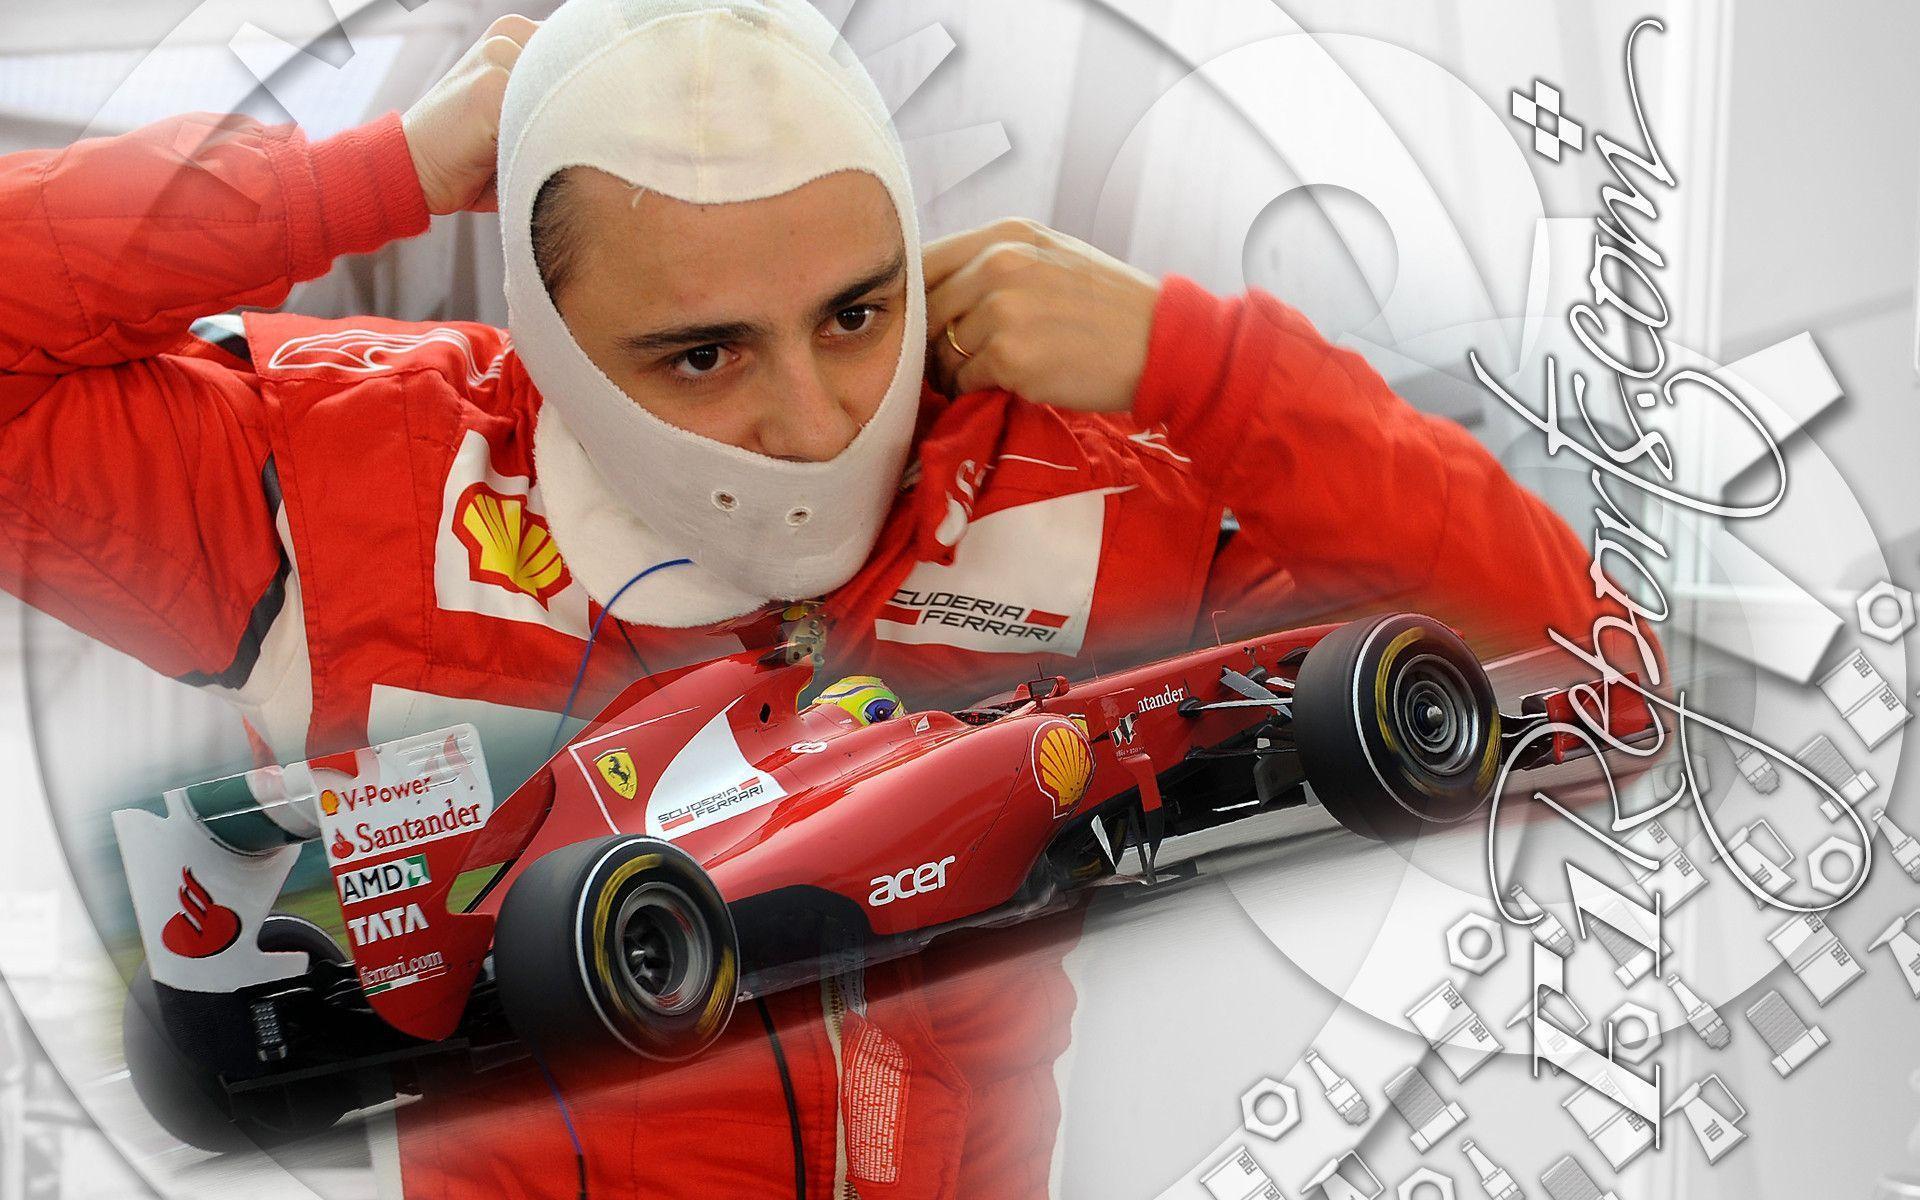 Felipe Massa car wallpaper. High Quality Wallpaper, Wallpaper